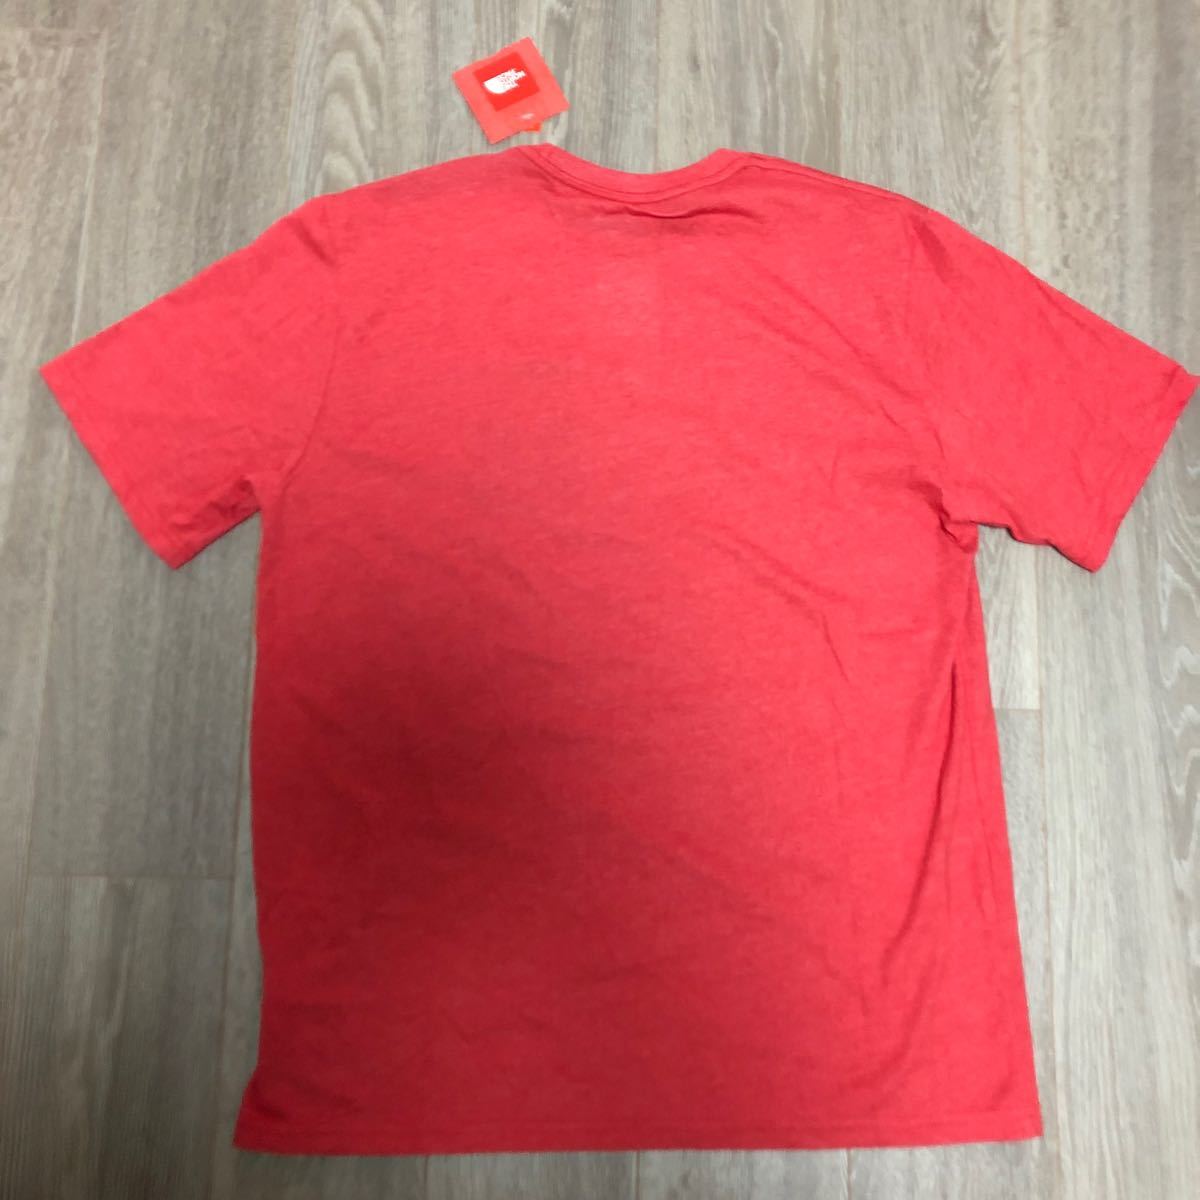 THE NORTH FACE ハーフドーム ビッグロゴ 半袖Tシャツ 海外限定 ロングTシャツ ロゴTシャツ ロゴ